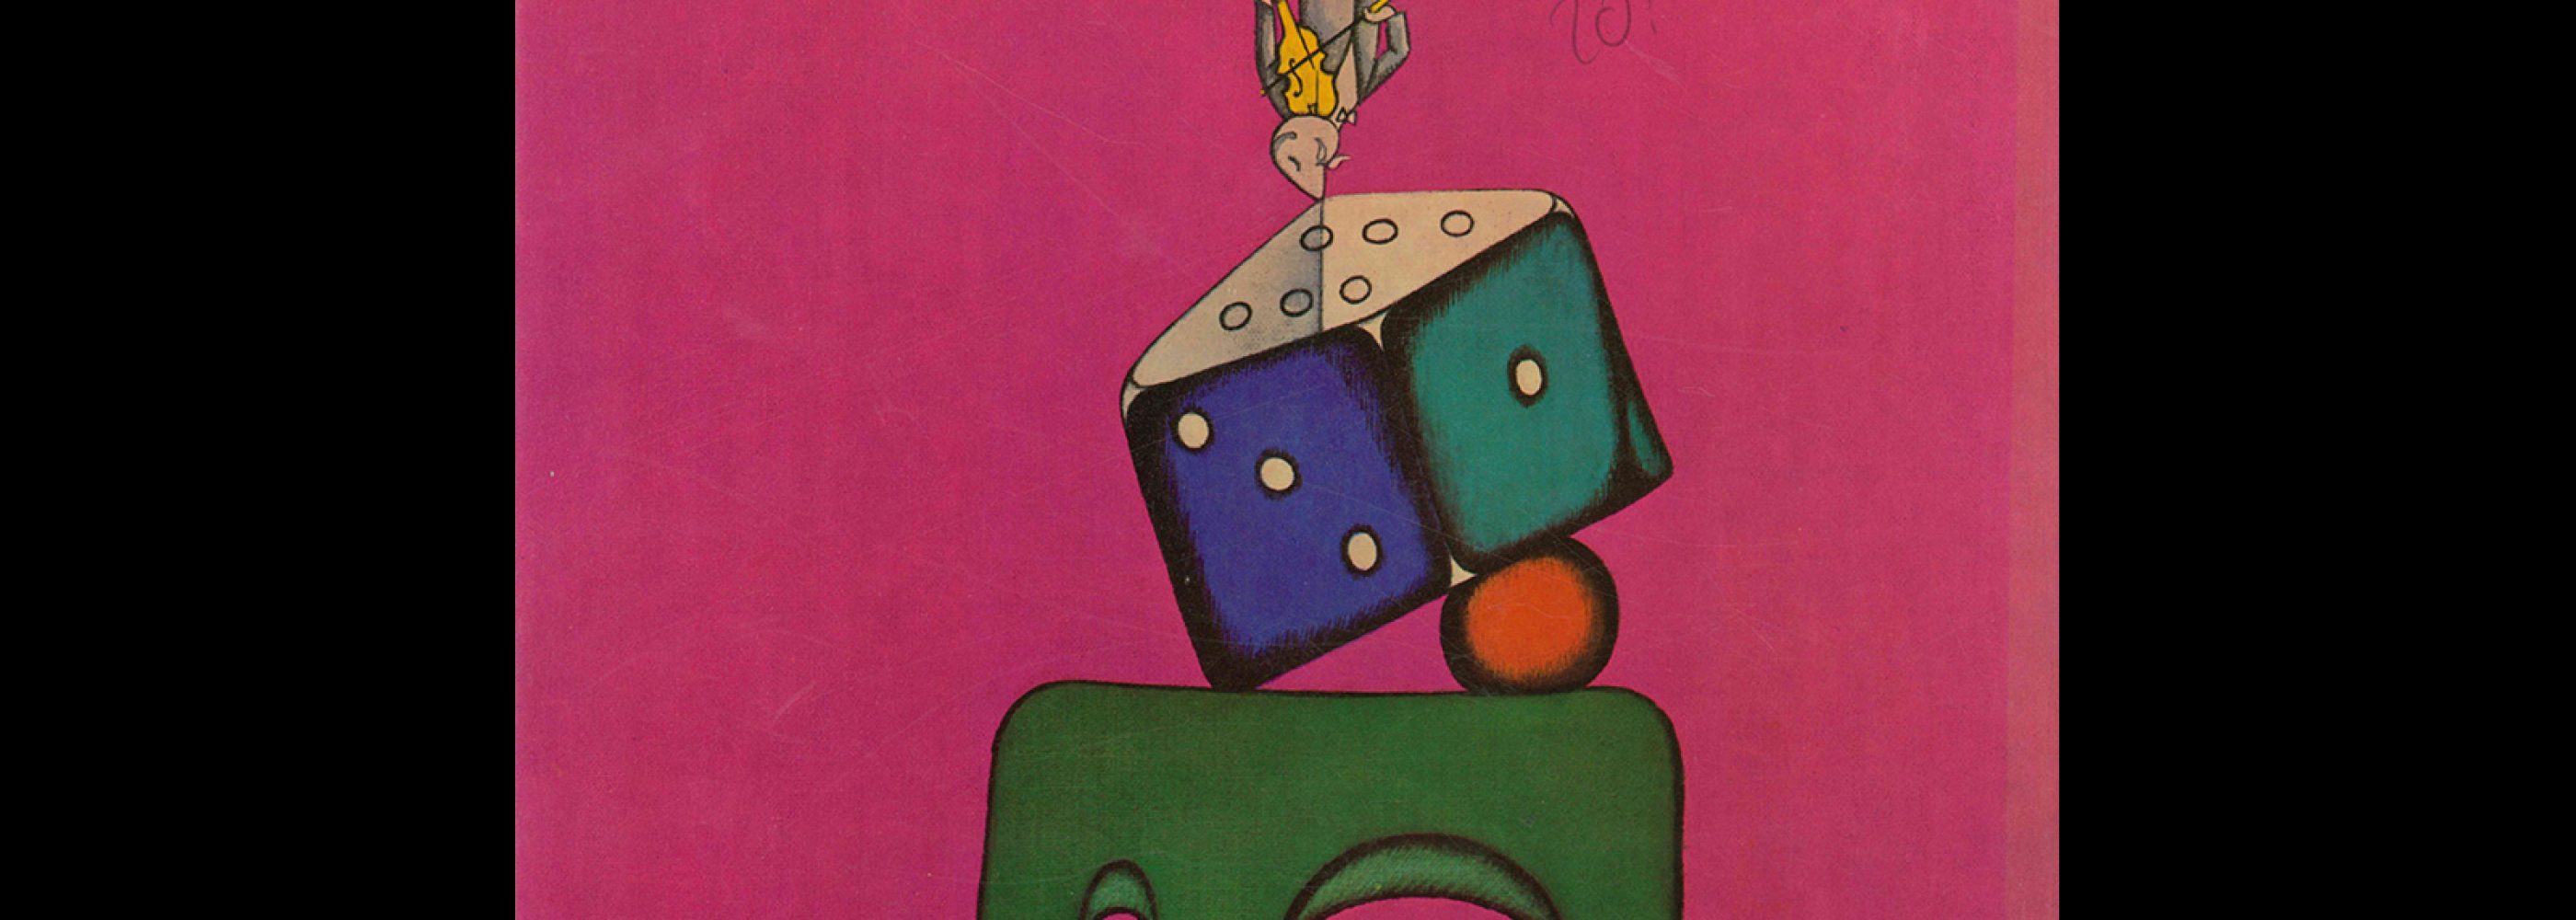 Graphis 162, 1972. Cover design by Olga Siemaszko.